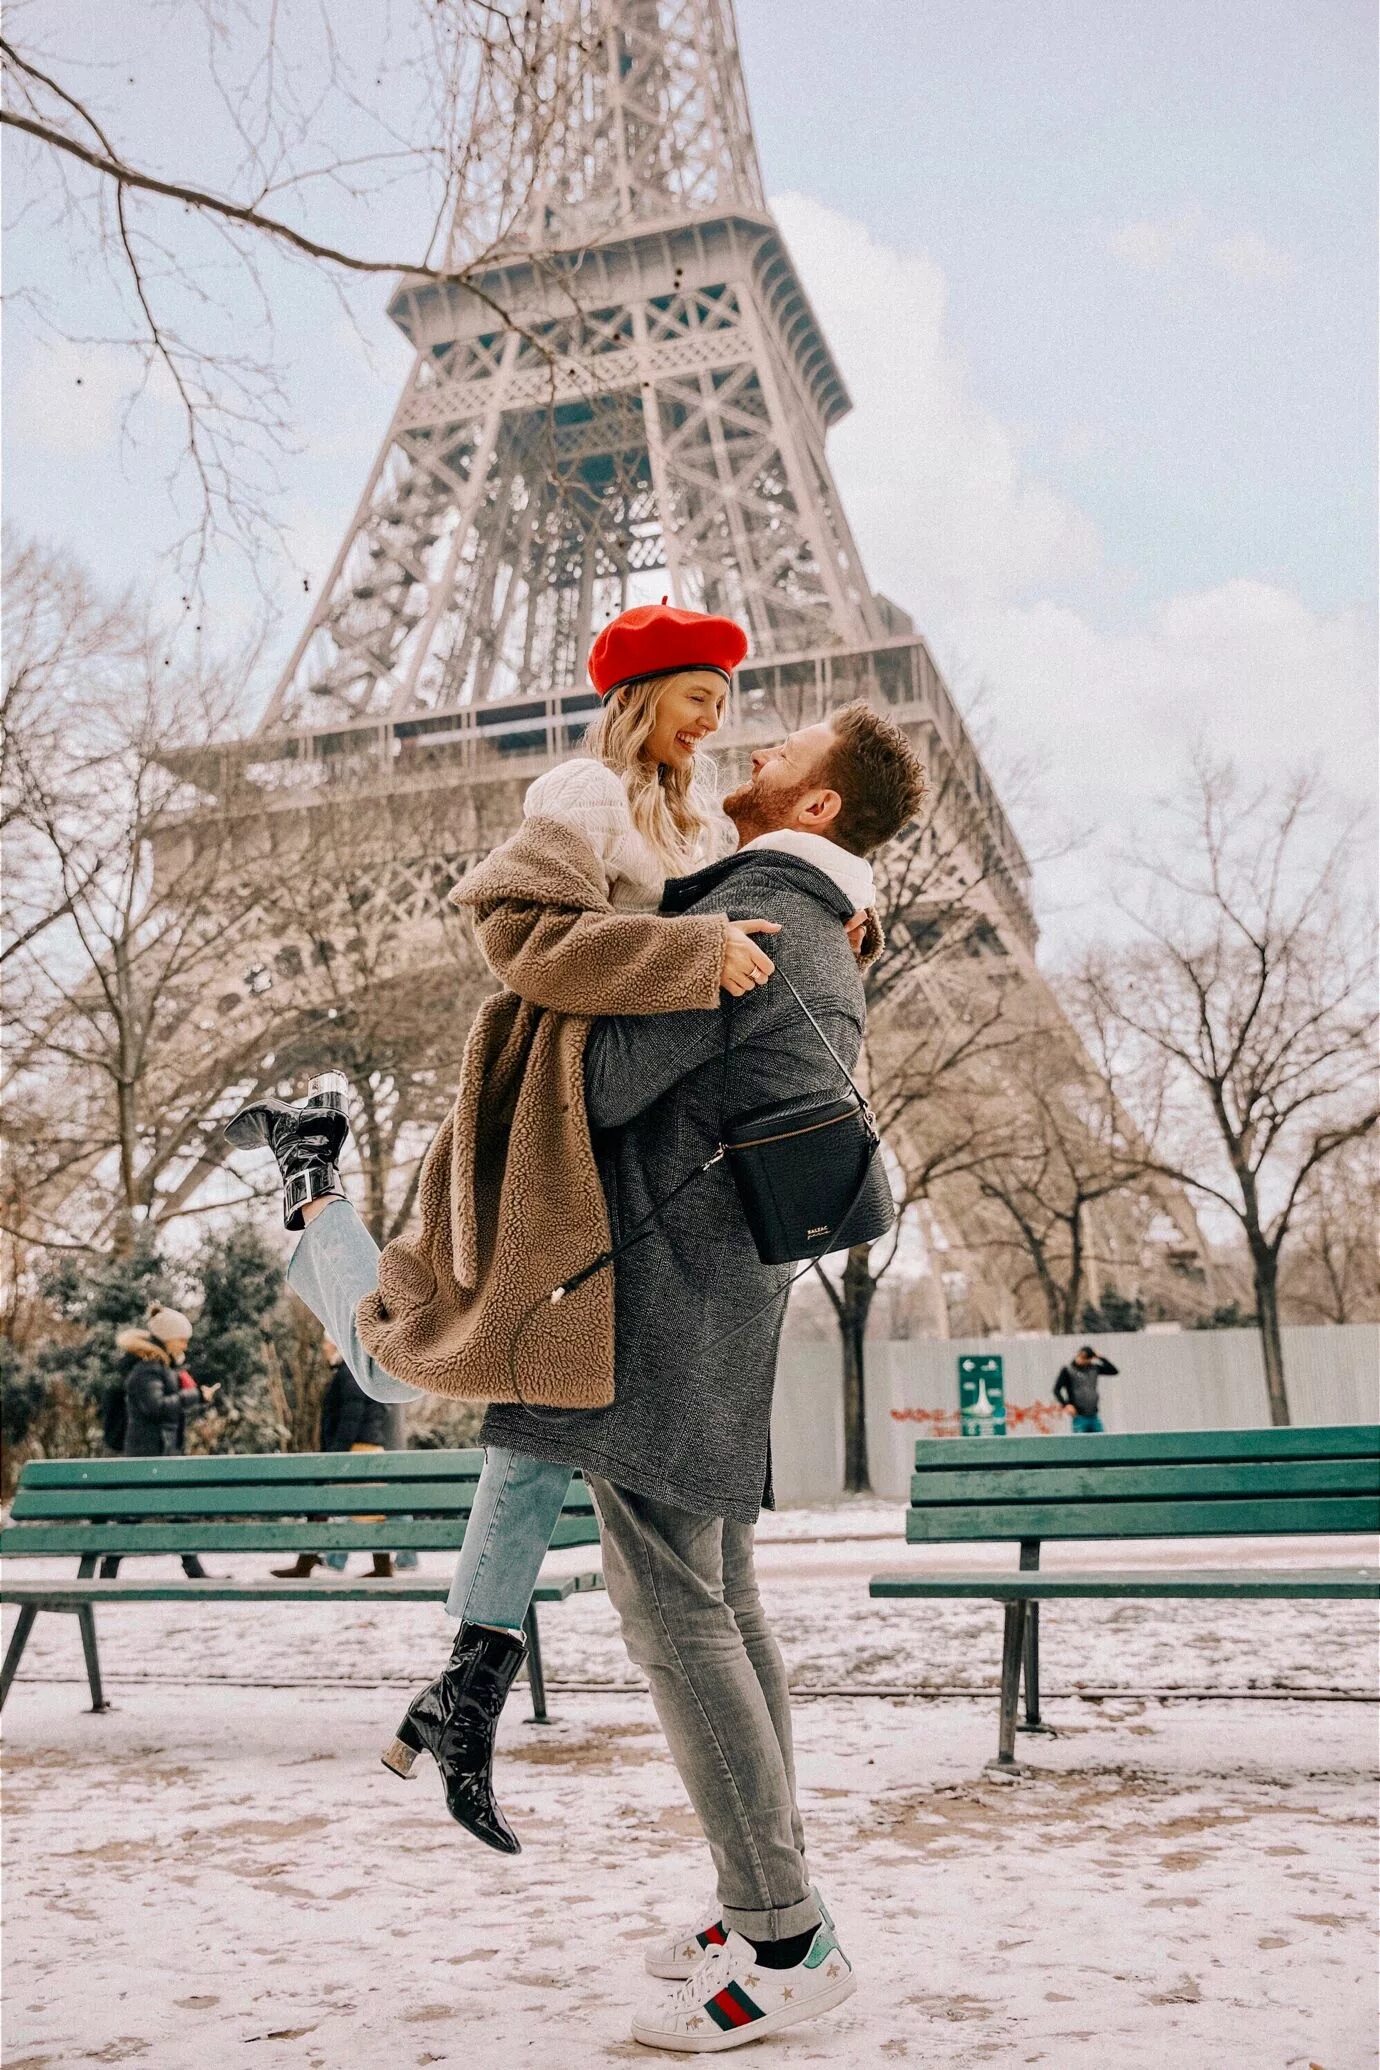 Фотосессия в париже. Париж зимой. Зимняя фотосессия в Париже. Влюбленные в Париже. Влюбленная пара в Париже.